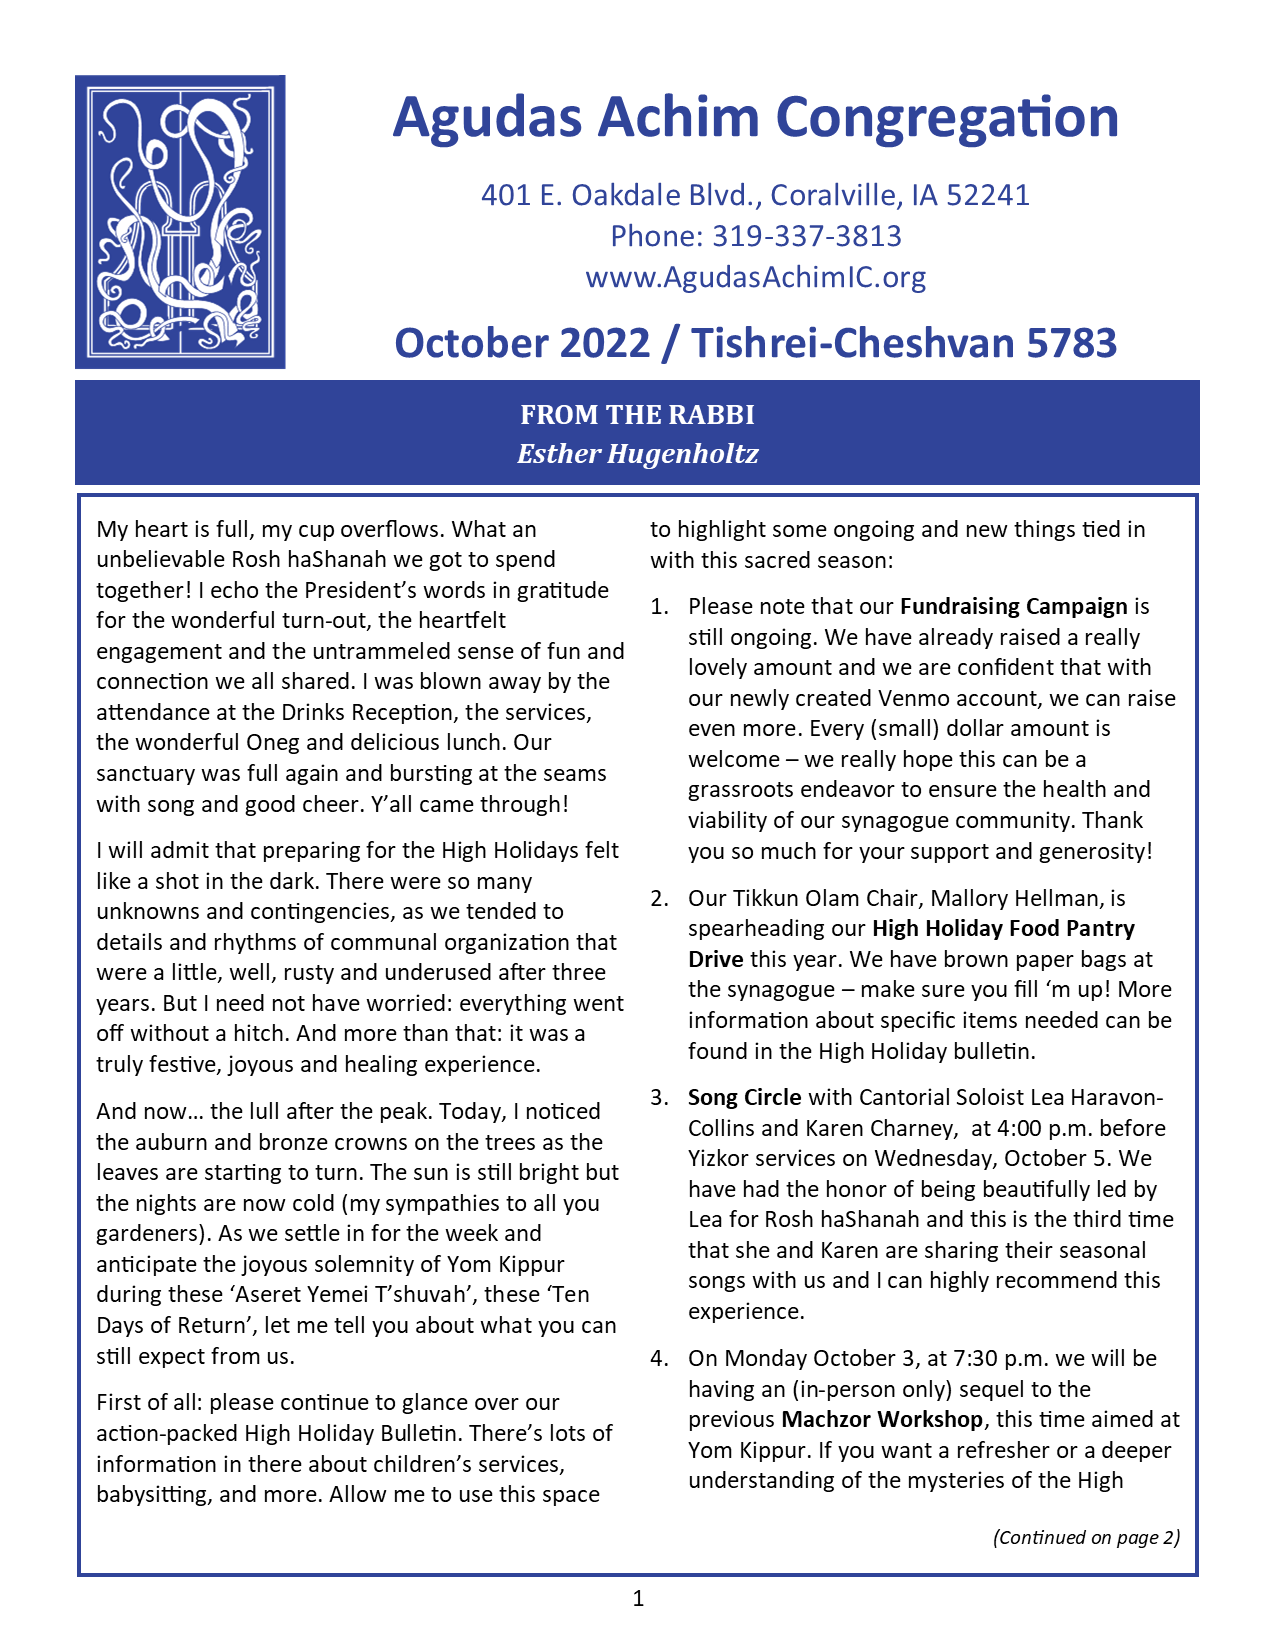 October 2022 Bulletin Cover